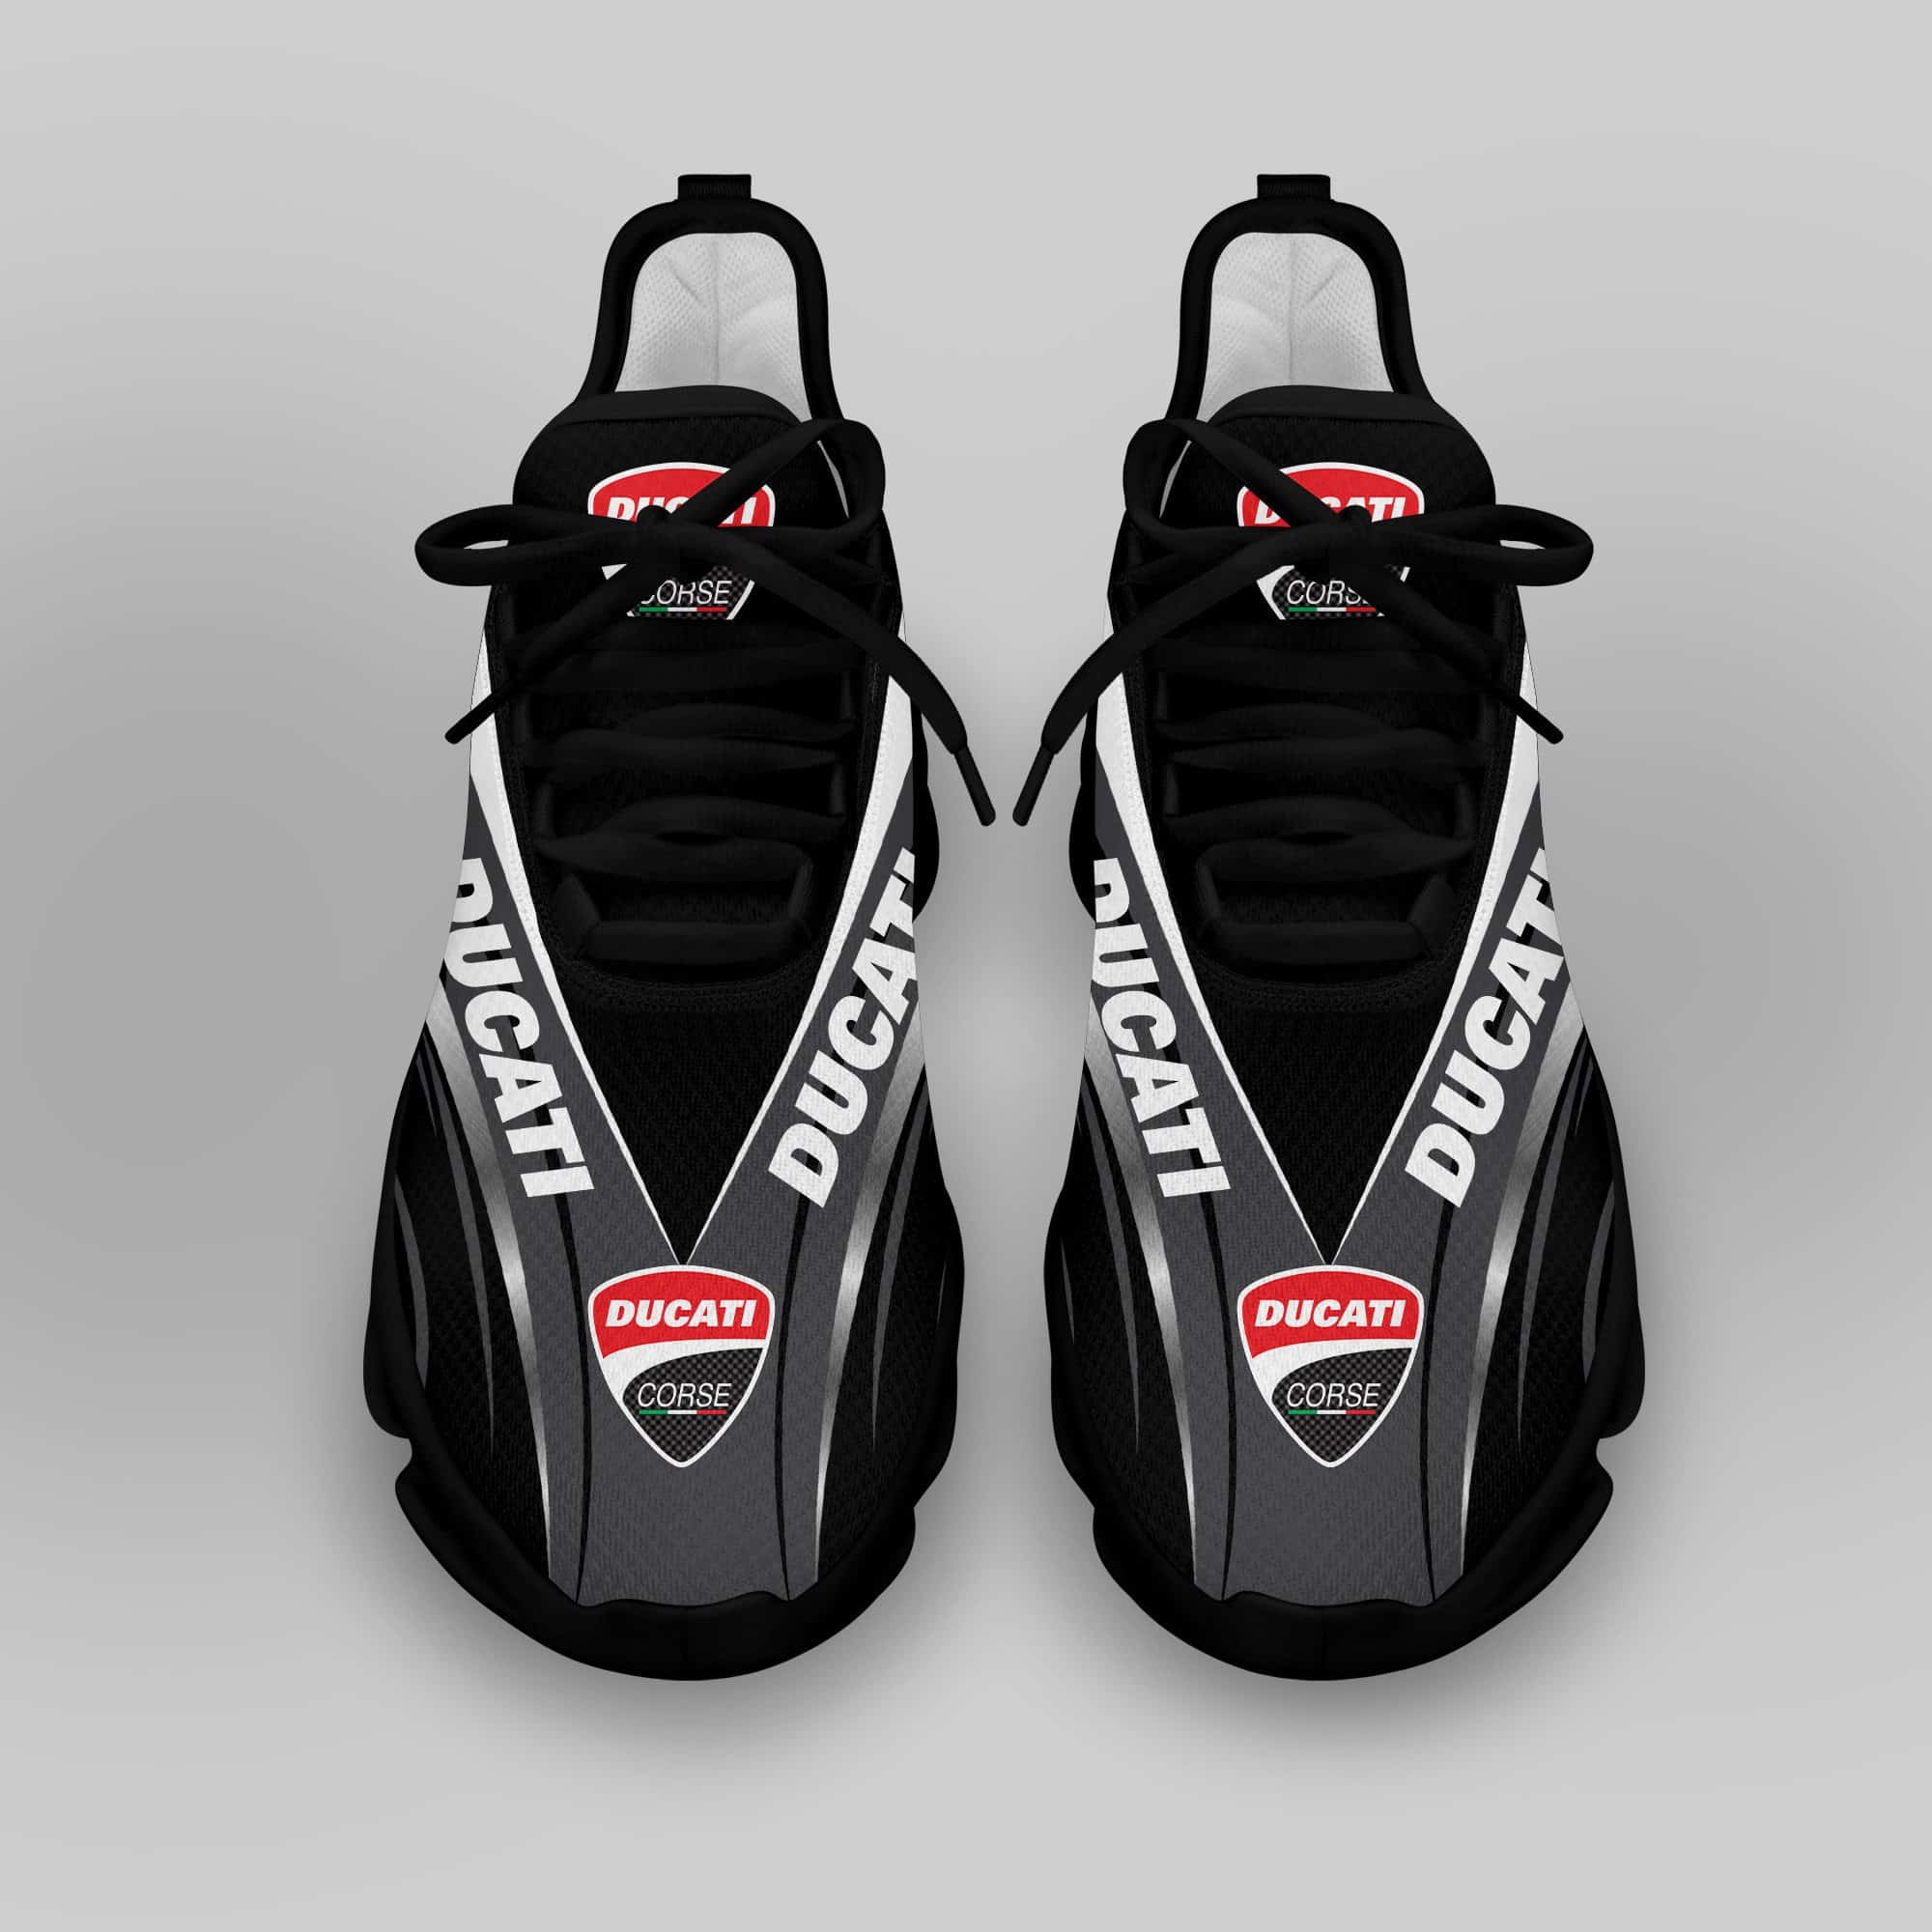 Ducati Racing Running Shoes Max Soul Shoes Sneakers Ver 53 4